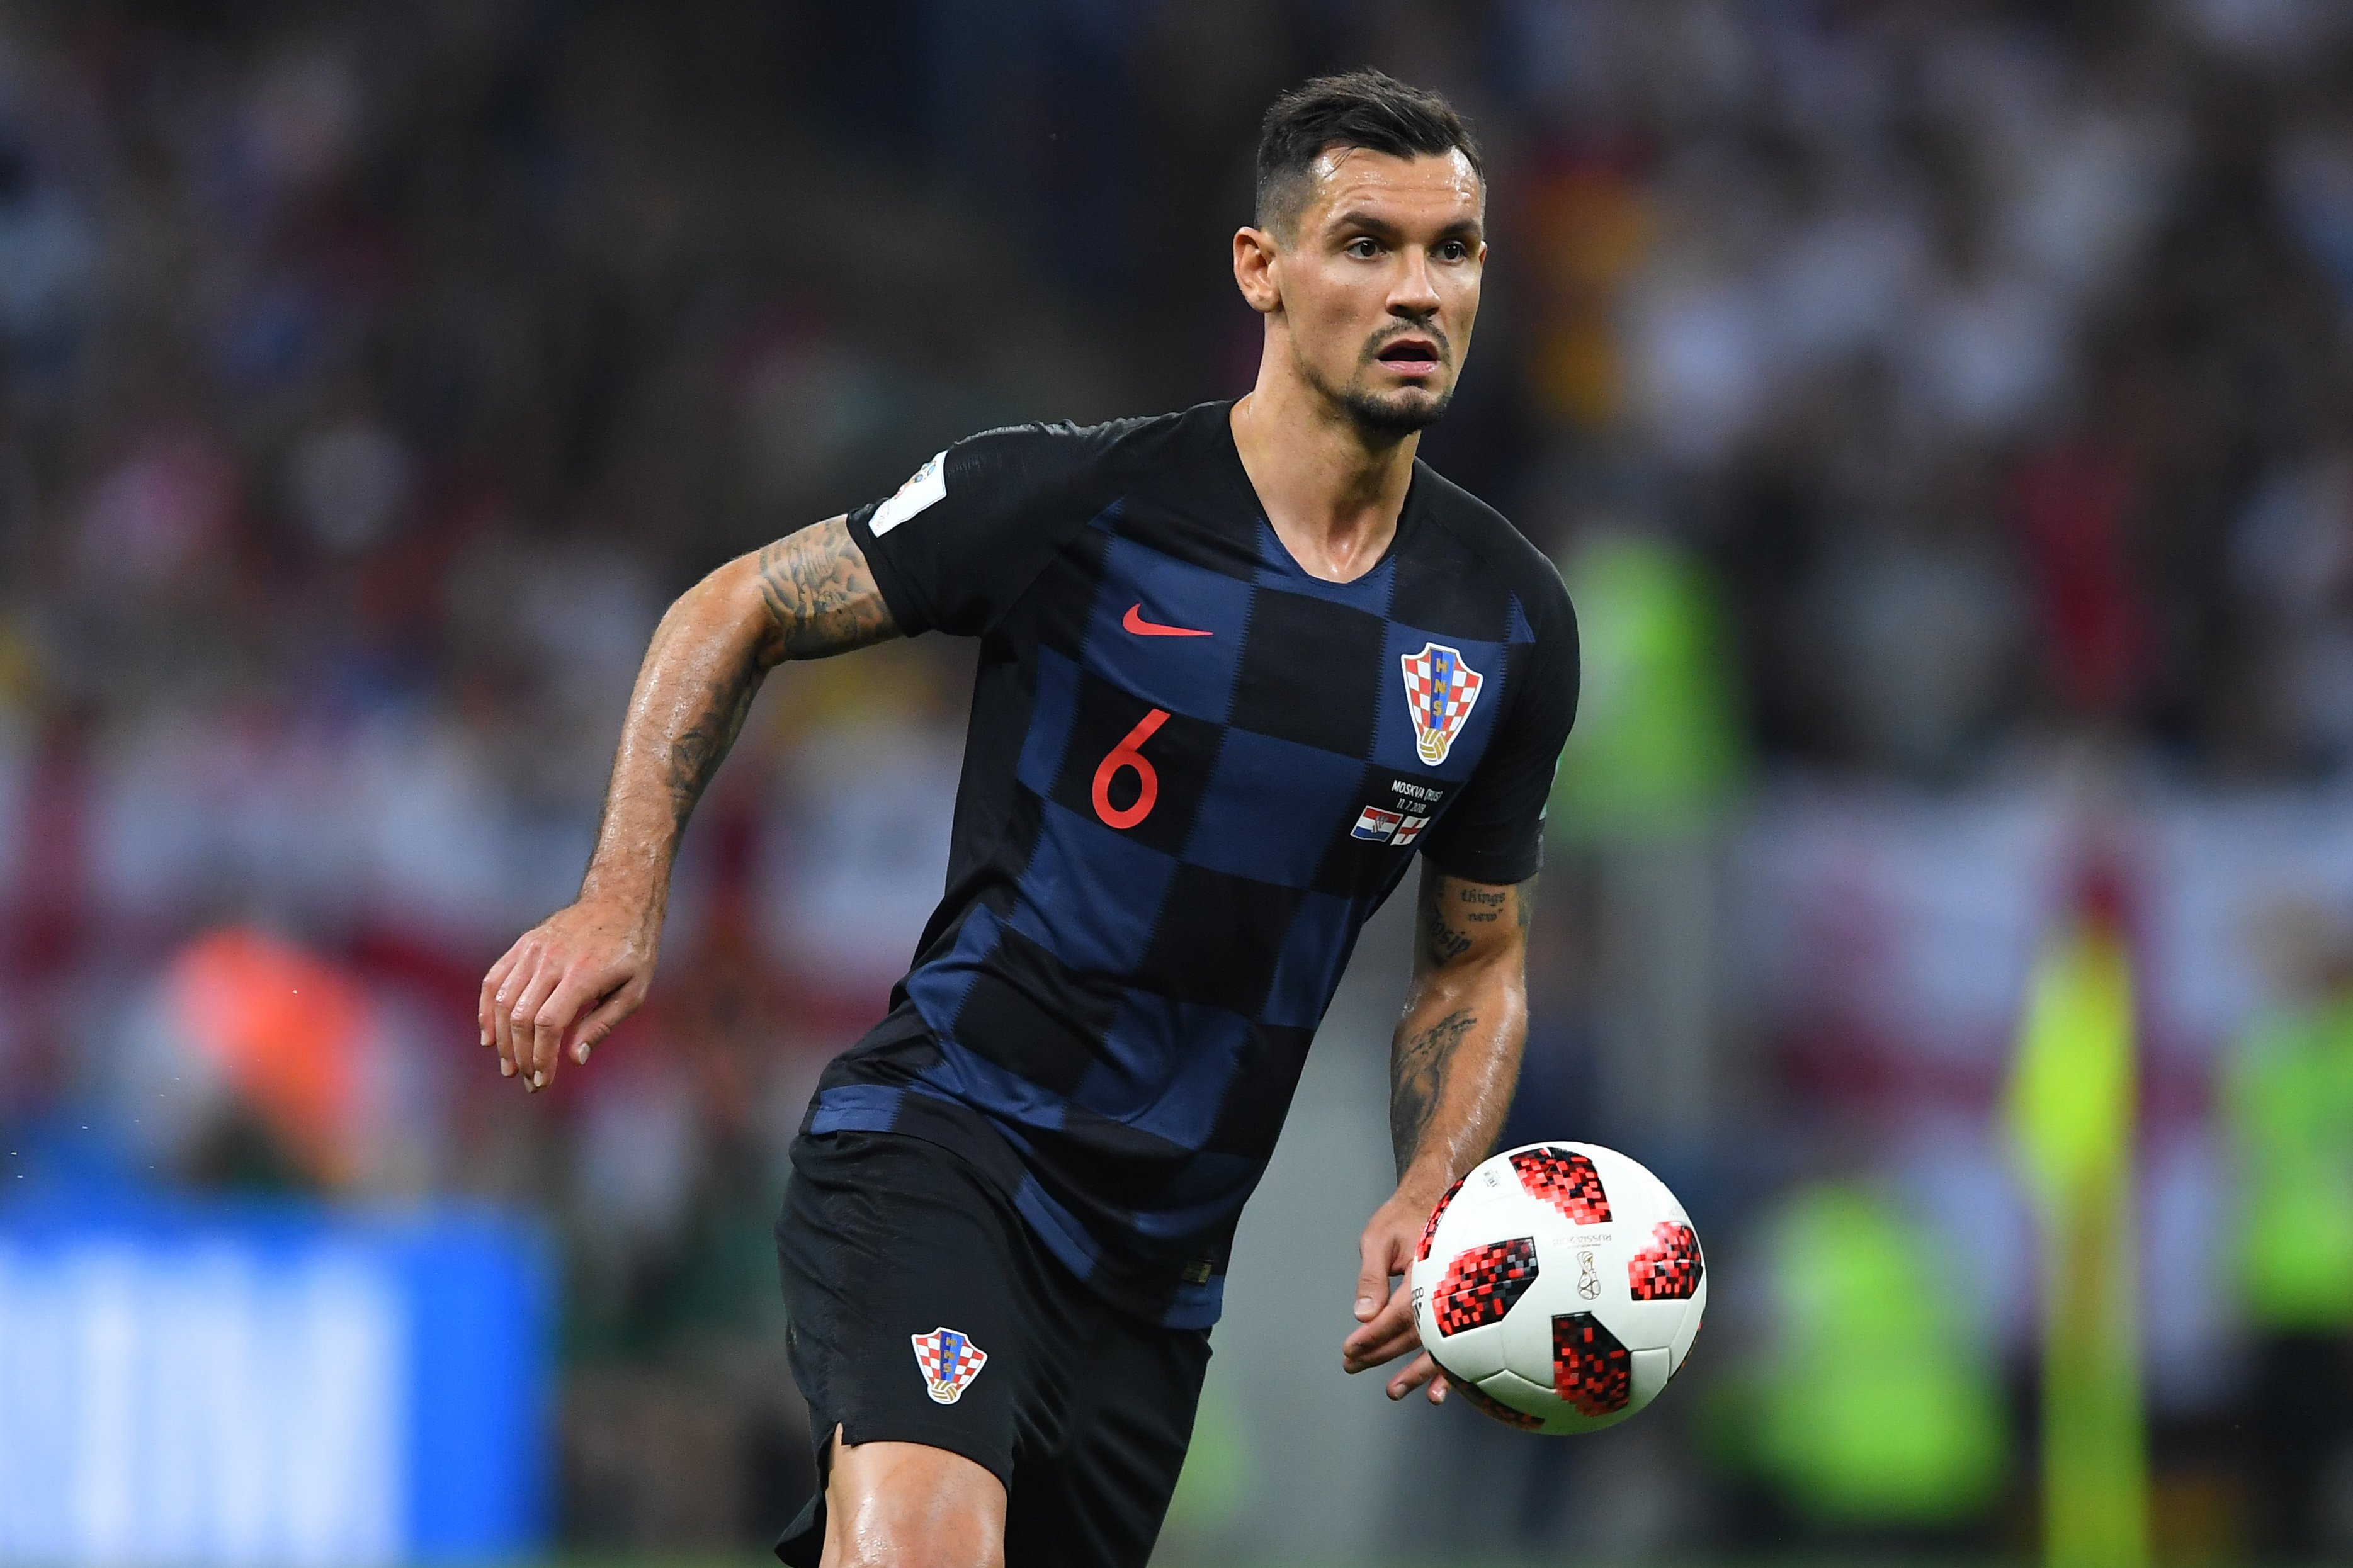 UEFA Hands Croatia’s Lovren One Match Ban Over Offensive Social Media Post